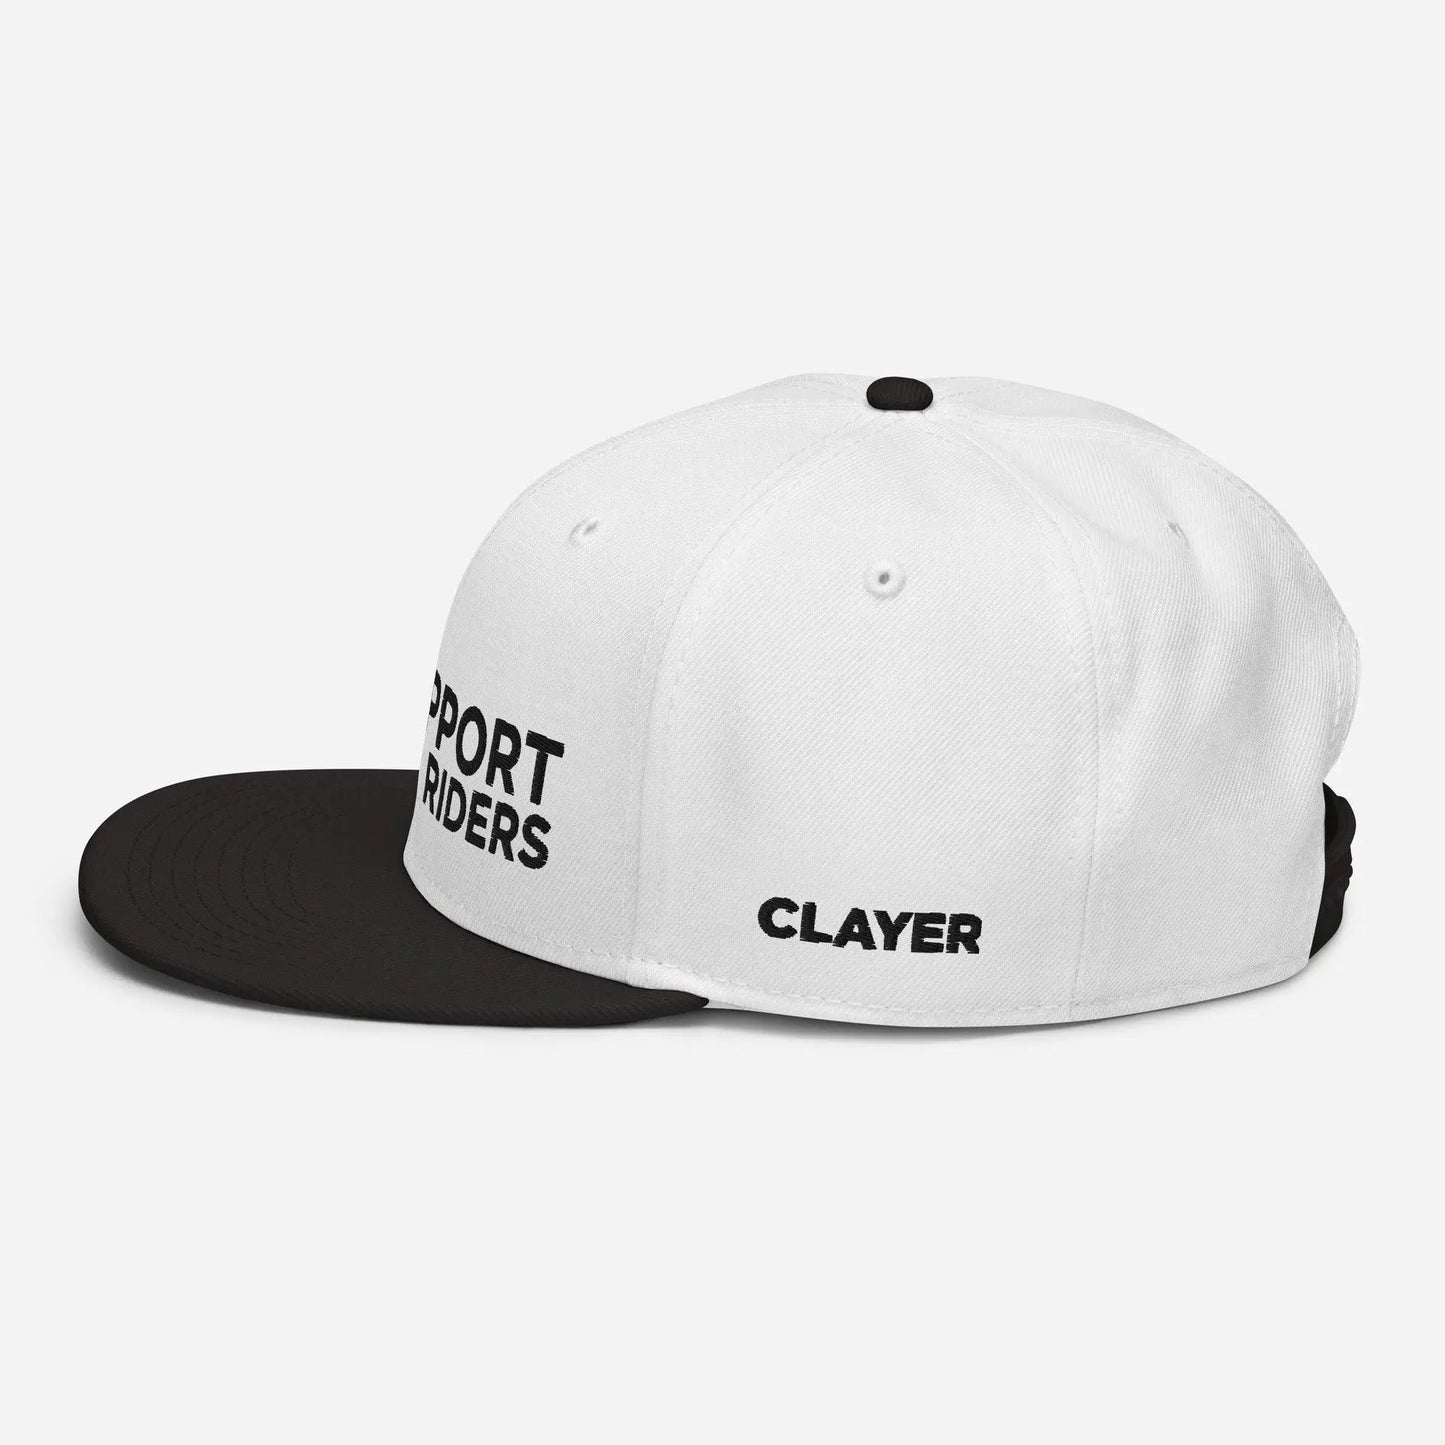 Clayer - 支持骑手 - 后扣帽 - CLAYER